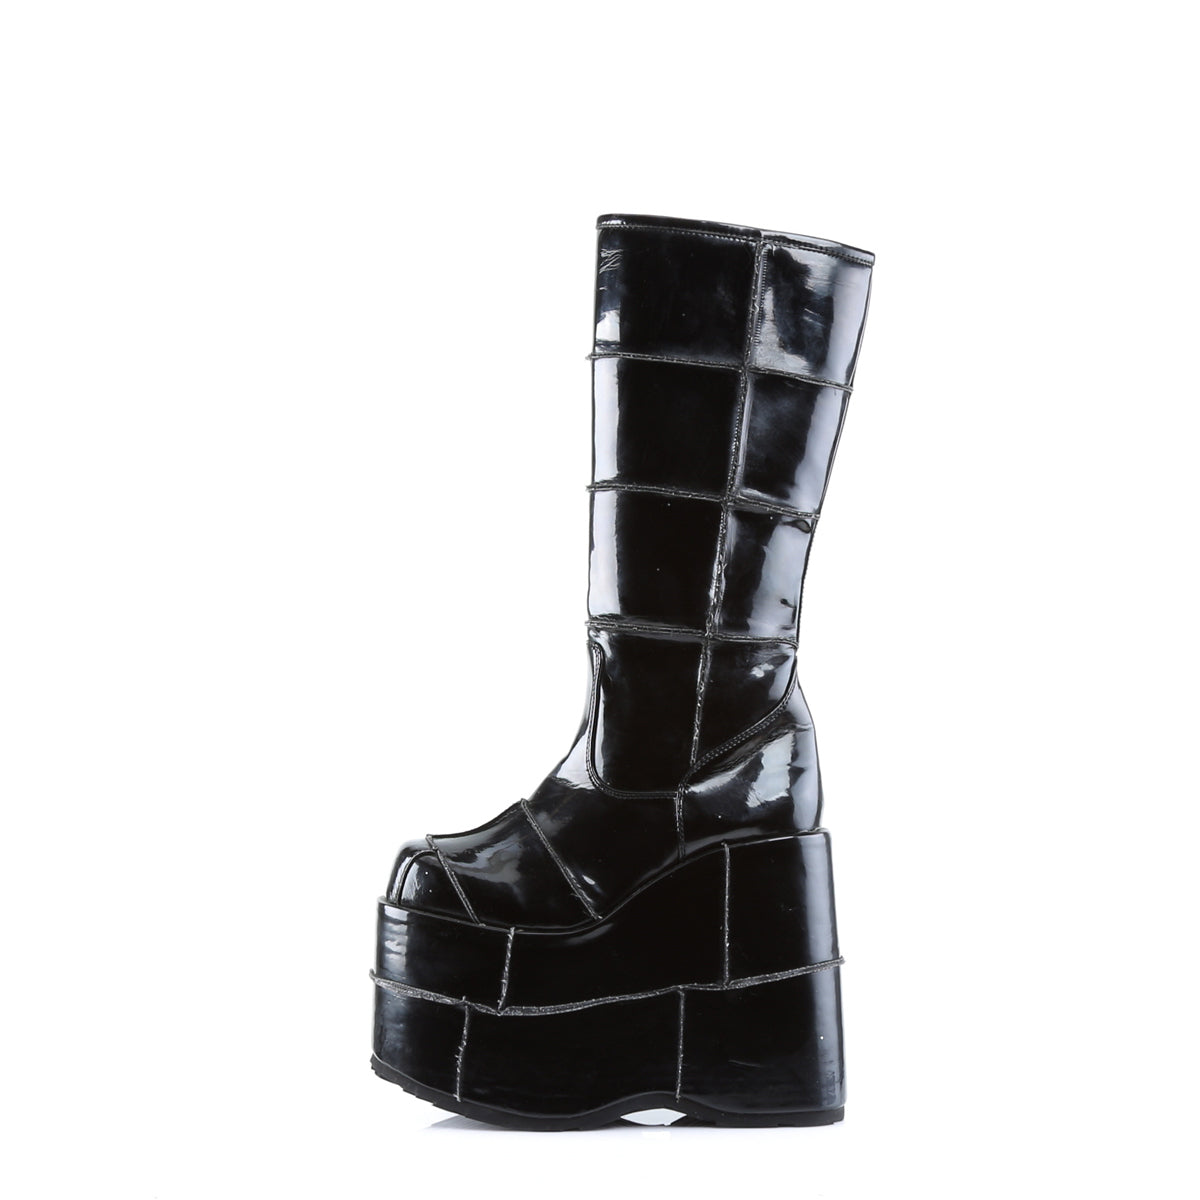 STACK-301 Demonia Black Patent Unisex Platform Shoes & Boots [Demonia Cult Alternative Footwear]